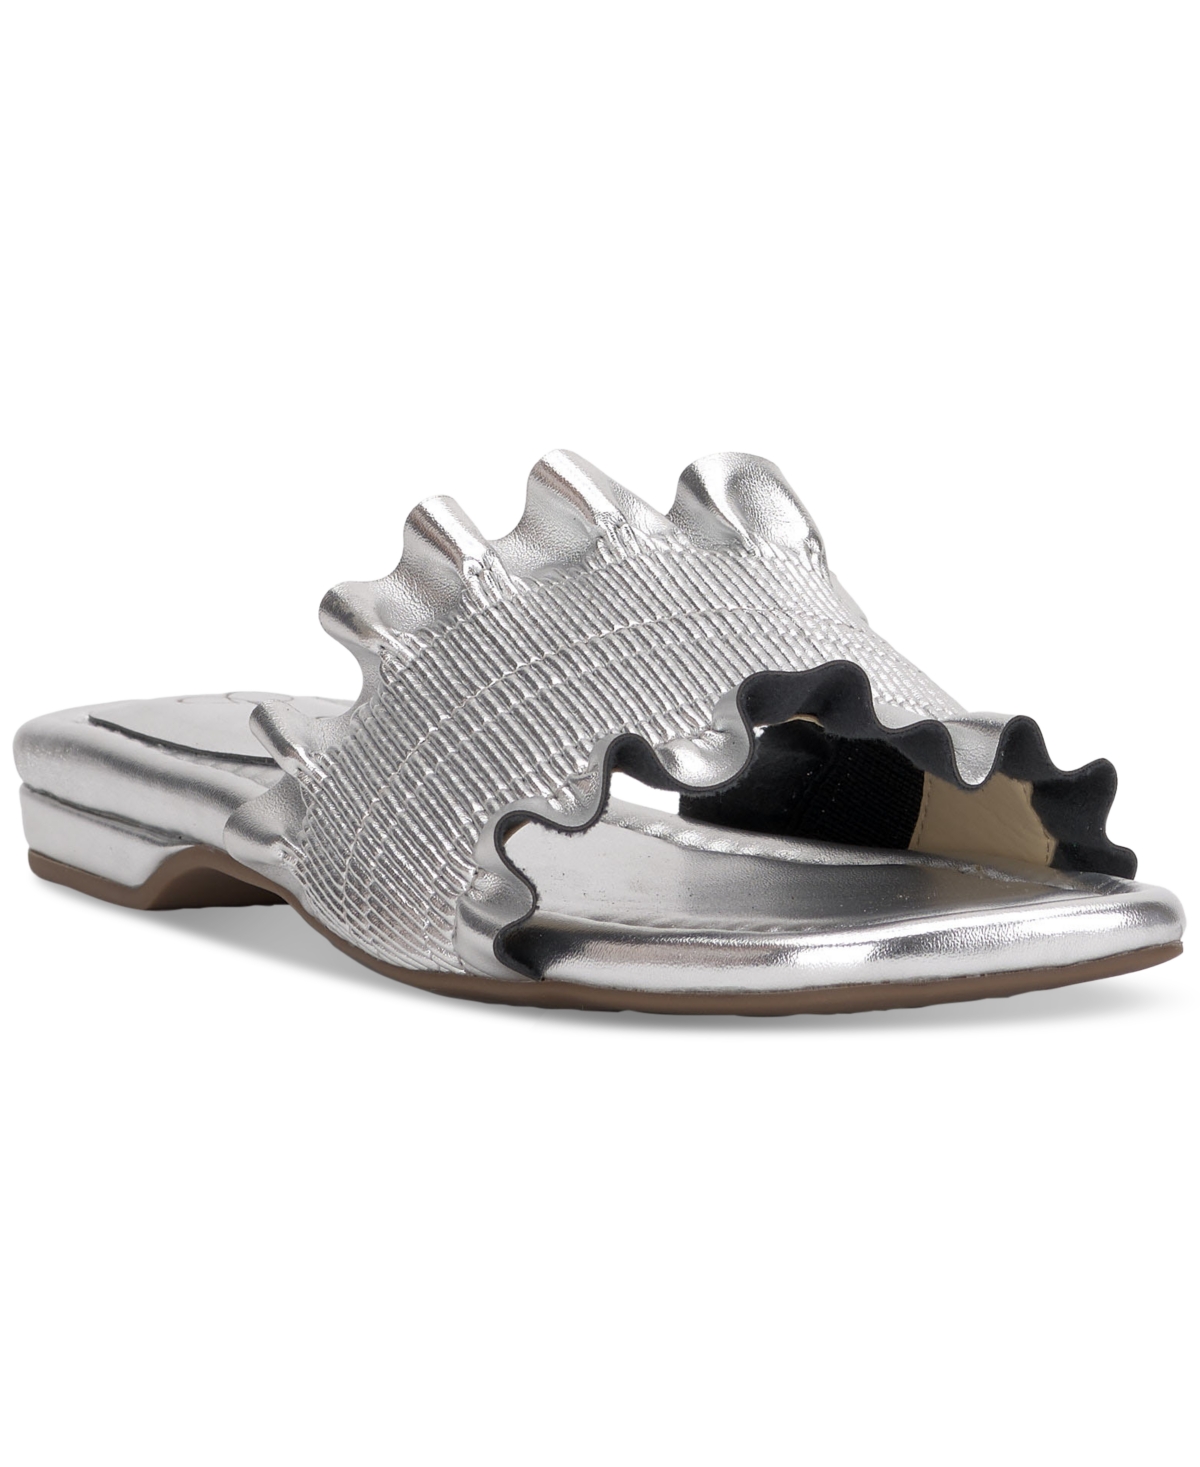 Camessa Square Toe Ruffle Slide Sandals - Silver Faux Leather